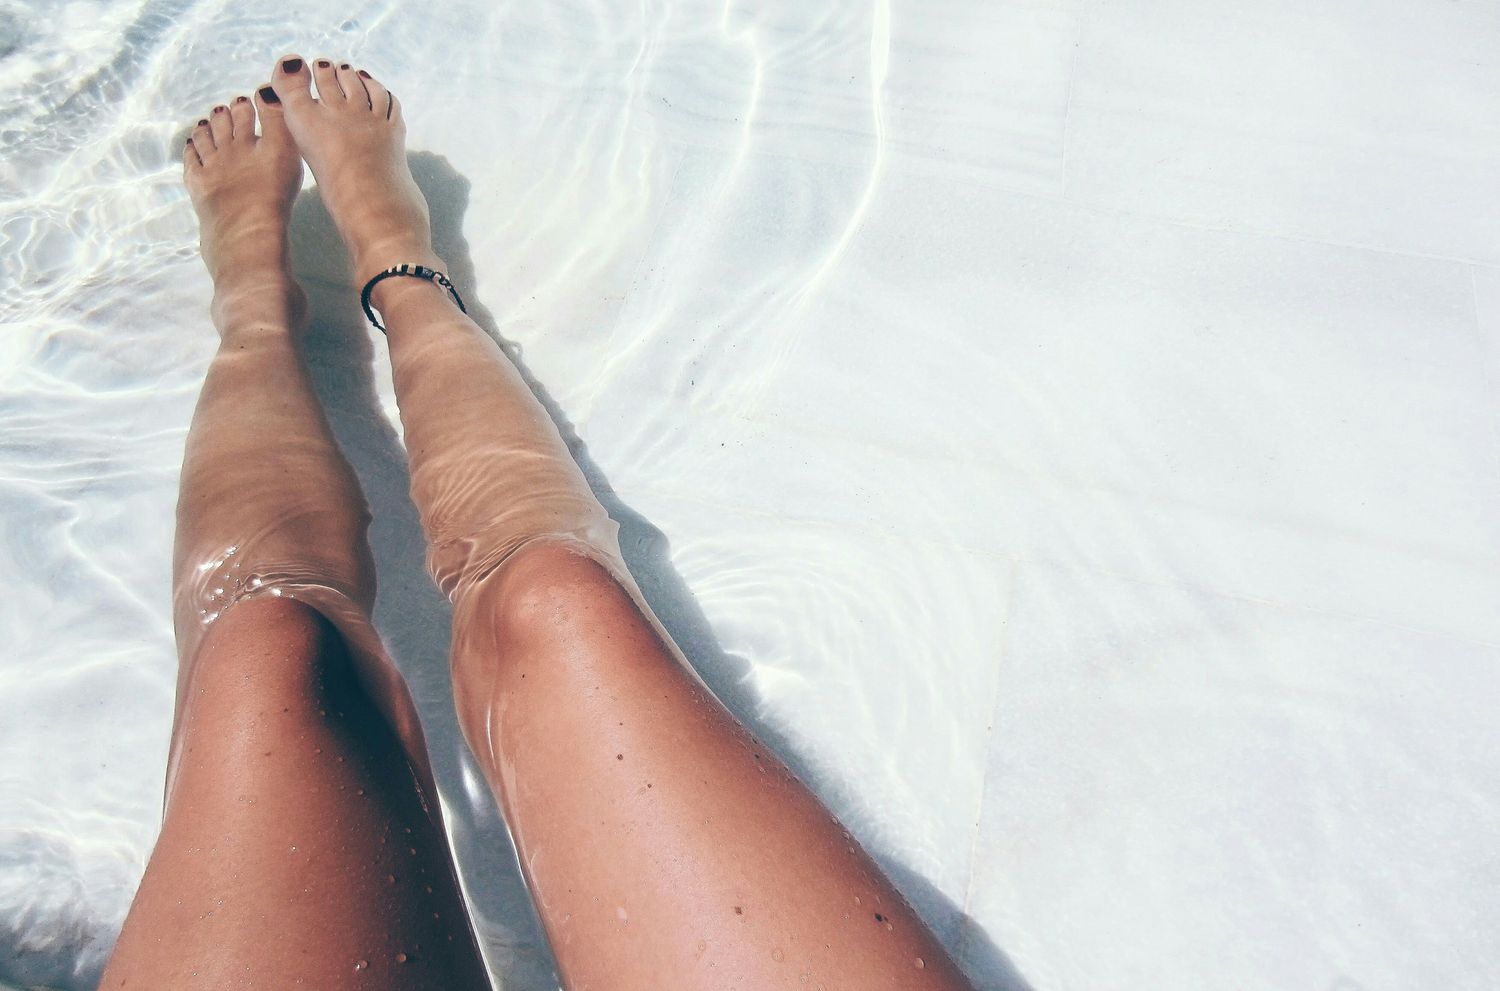 A woman's legs in a pool